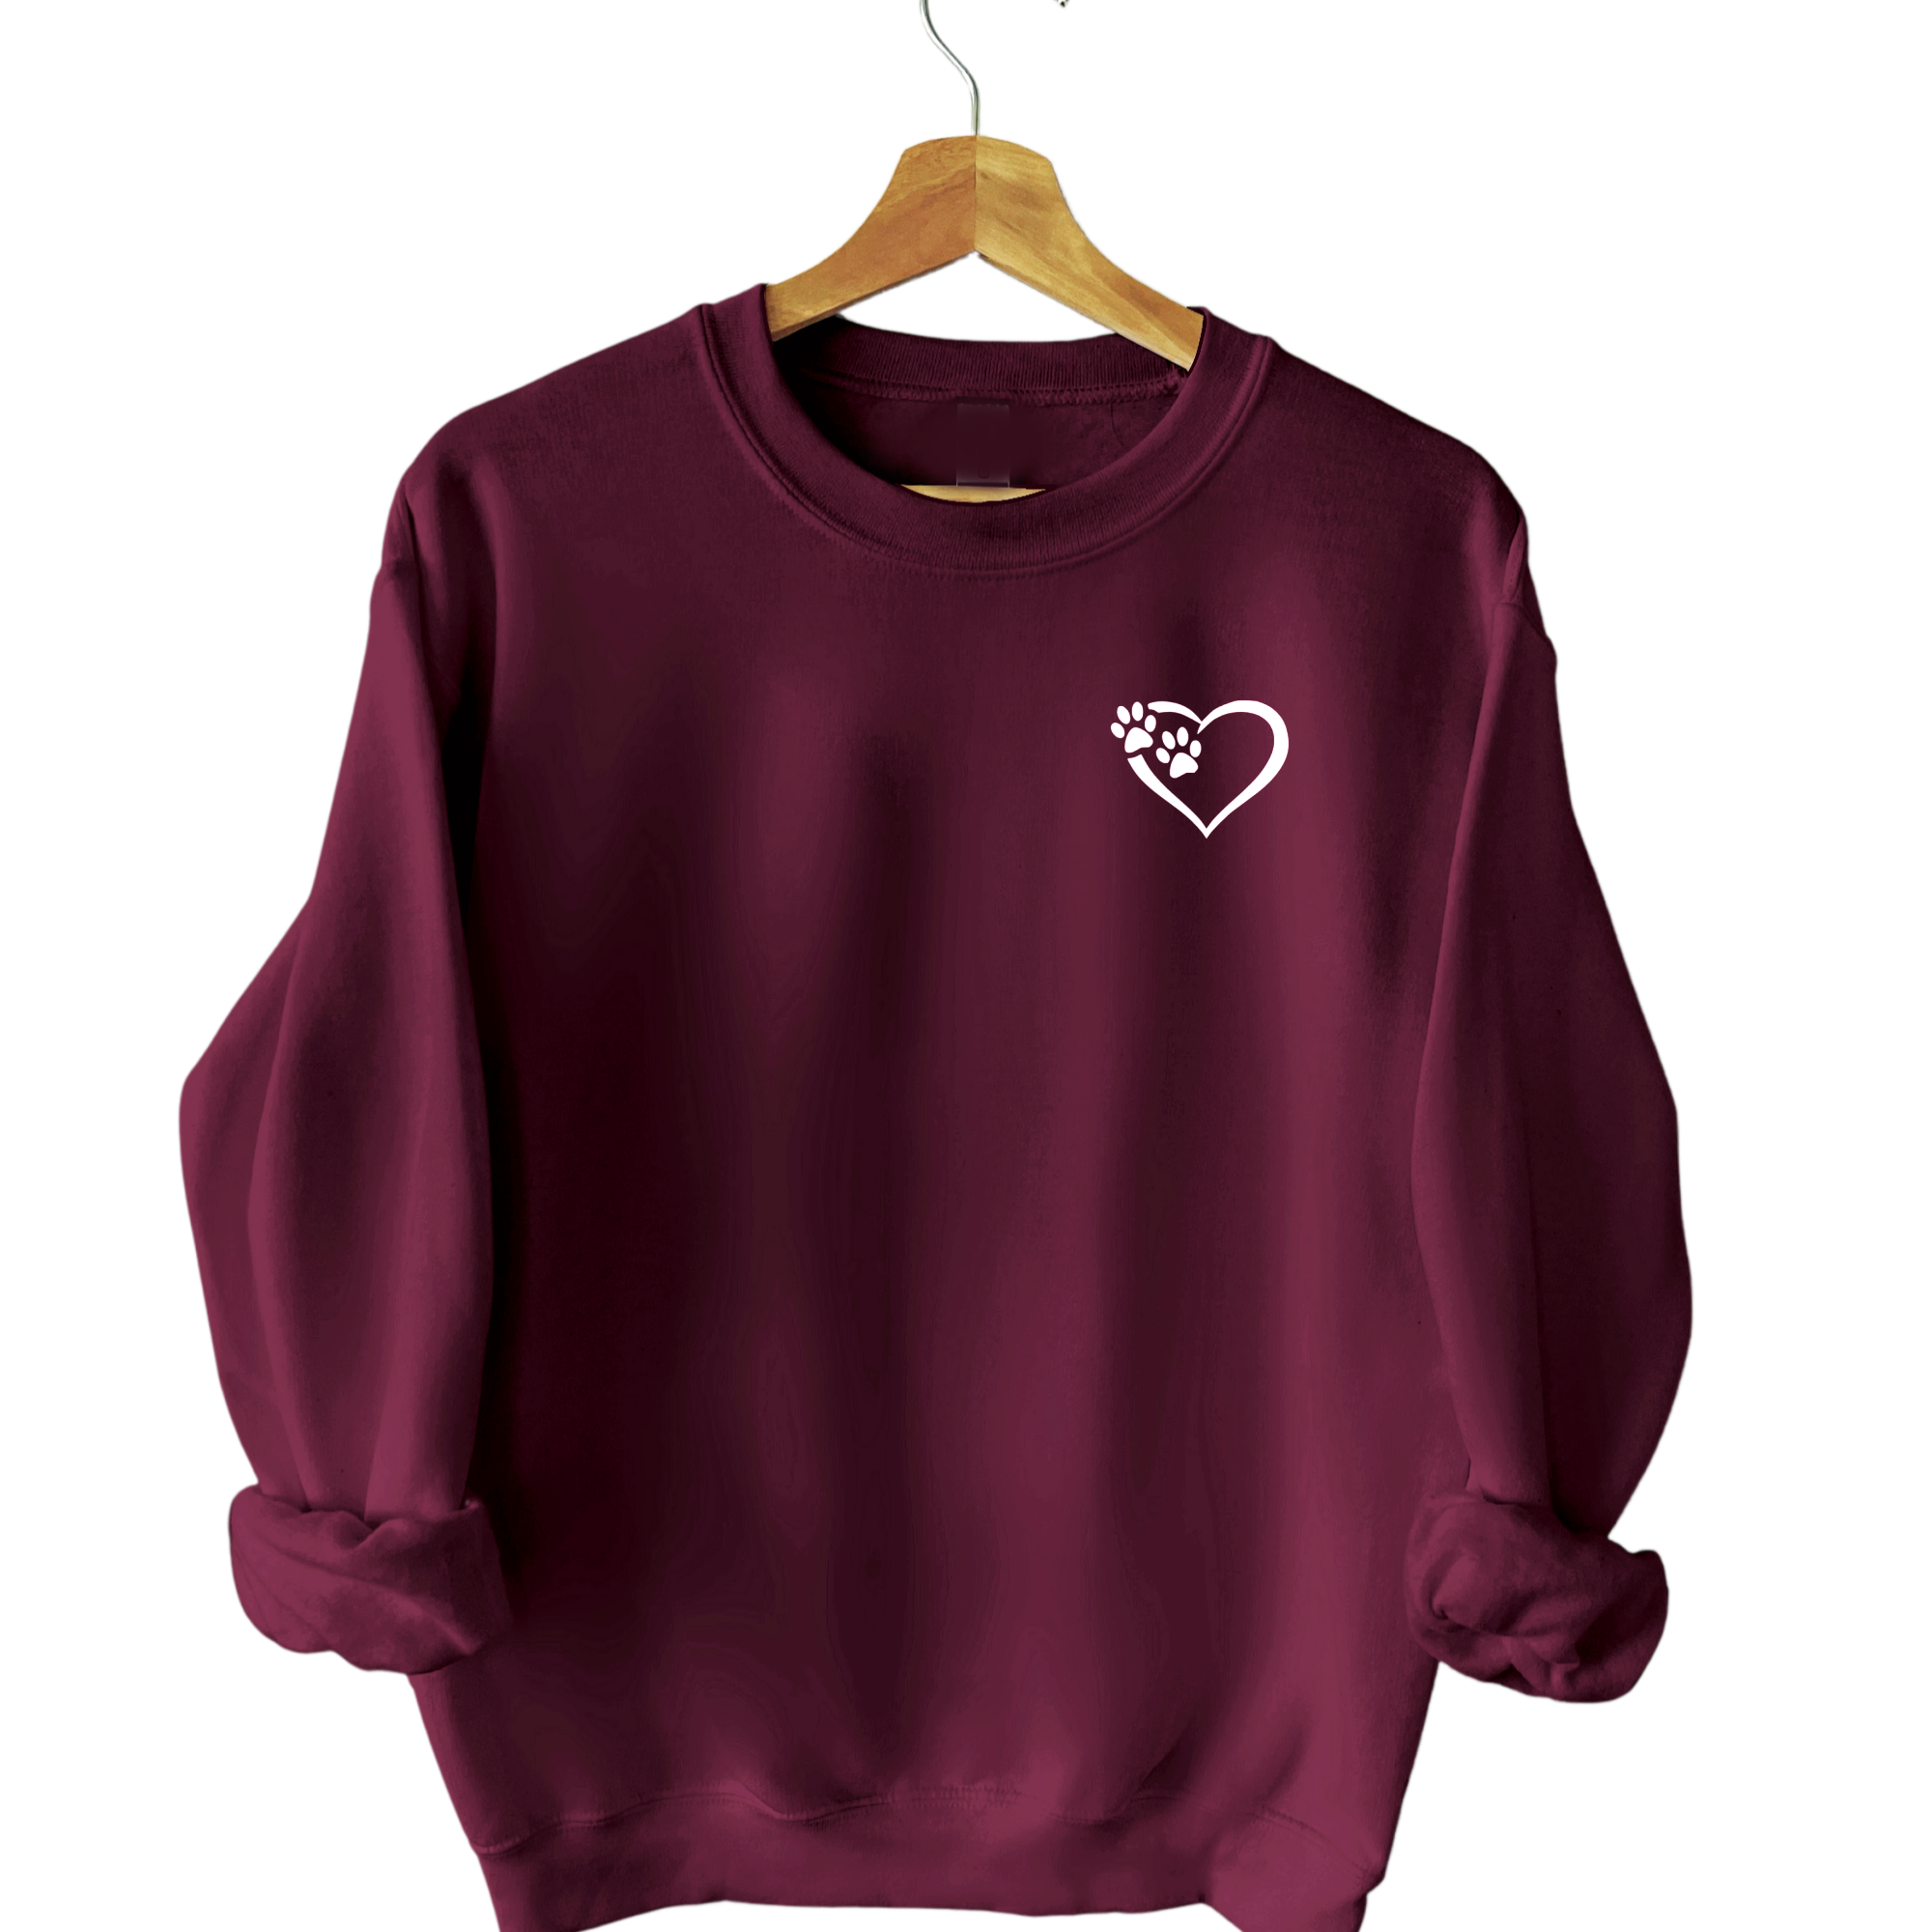 Heart and Paws Sweatshirt - Burgundy Size XS -34" (UK 8-10)